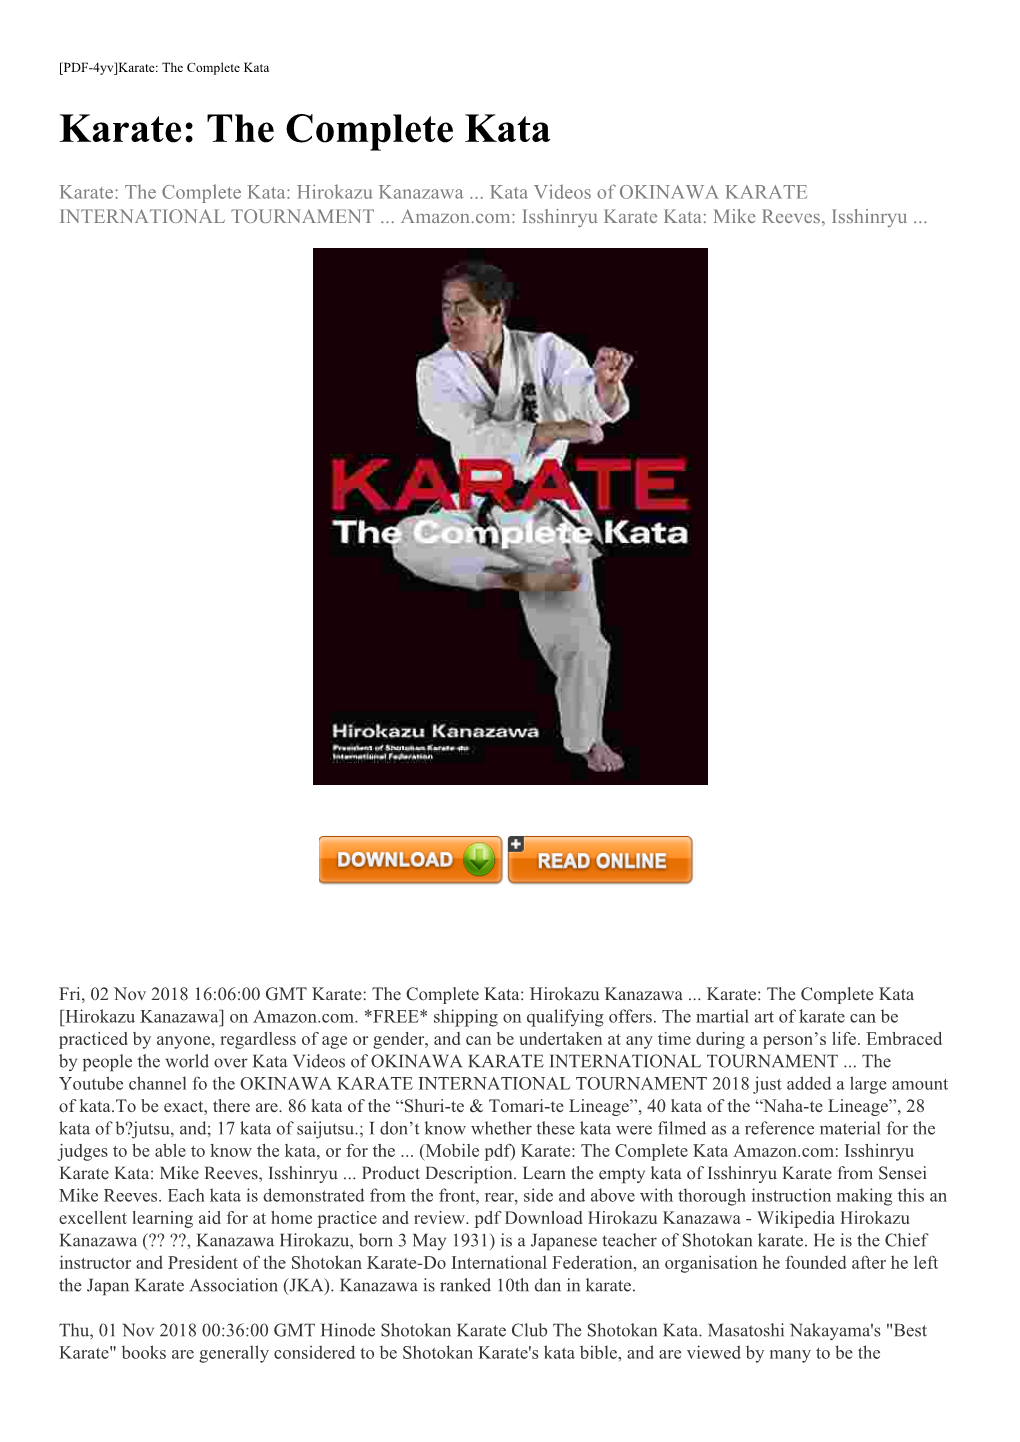 (Mobile Pdf) Karate: the Complete Kata Amazon.Com: Isshinryu Karate Kata: Mike Reeves, Isshinryu